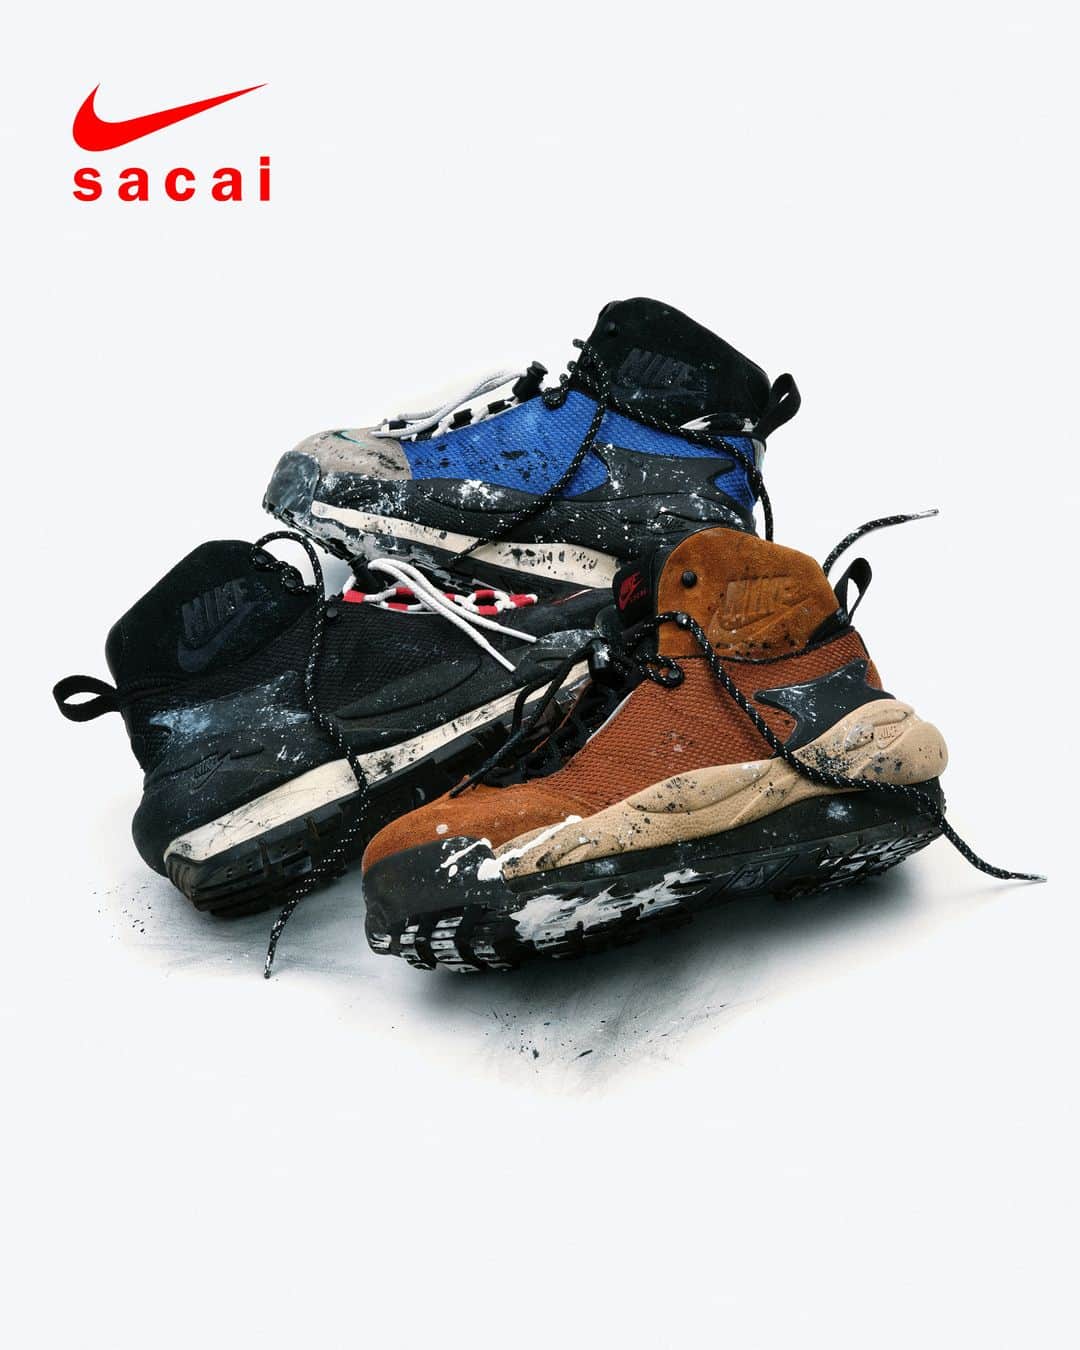 sacaiのインスタグラム：「Nike x sacai Magmascape Nike x sacai Magmascapeを12月6日(水)に発売いたします。 VARSITY ROYAL / BLACK-LIGHT ZEN GREY, BLACK / BLACK, LT BRITISH TAN / LT BRITISH TAN-BLACKの3色で展開し、BLACK / BLACKカラーはNike Japanおよびsacaiオンラインストア限定展開となります。  なおこの度の発売は2回に分けて行われます。 いずれも別箇の事前抽選を行いますので下記詳細をご確認ください。  1.Early Access - 11月30日(木) 一般販売に先駆け、都内特別会場にて、抽選で当選された方を対象に先行販売を実施いたします。 本日日本時間17時よりオンラインストア上ニュースページに表示されるURLより内容をご確認の上、ご応募ください。  2.オンラインストアでの販売- 12月6日(水) 11月29日(水)日本時間18時よりオンラインストア上に表示開始するNike x sacai Magmascape抽選ページよりお申込みをお願いいたします。 詳細は11月29日(水)にニュースページおよび当Instagramアカウントにて告知いたしますので、今しばらくお待ちください。 *なお、オンラインでの販売のみ、sacai国内直営店舗での販売はございません。予めご了承ください。  なお、発売を記念し、コレクションの世界観を体験していただけるインスタレーション企”画GO FIND OUT.”を開催いたします。 詳細は追ってご案内差し上げますので、お楽しみ に。  Nike x sacai Magmascape Nike x sacai Magmascape will launch on December 6th, dropping in 3 colorways, VARSITY ROYAL / BLACK-LIGHT ZEN GREY, BLACK / BLACK, LT BRITISH TAN / LT BRITISH TAN-BLACK, with BLACK / BLACK exclusive in Nike Japan and sacai online store.  For this launch there will be 2 different raffles for a chance to purchase.  1. Early Access- November 30th Ahead of the online launch date, there will be a chance for an early access for those who are selected and invited to our special venue in Tokyo. Details to be shared at news page of sacai online store, to be shown at 5PM JST today. Please check the news page for the entry details and qualifications.  2. Online store purchase- December 6th For your chance to purchase online, please enter the raffle through special Nike x sacai Magmascape raffle page, to be shown at 6PM JST on November 29th at sacai online store. For details and qualification for the raffle, you will be updated through sacai Instagram account as well as news page on sacai online store on November 29th. We appreciate your patience for this. *Launch will take place only online, and will not be available at sacai retailers in Japan.  In celebration of the launch, "GO FIND OUT.", a special installation to experience the collaboration will take place in Tokyo. Stay tuned for more details.  #sacai #sacainike #sacainikemagma  @nike @niketokyo」